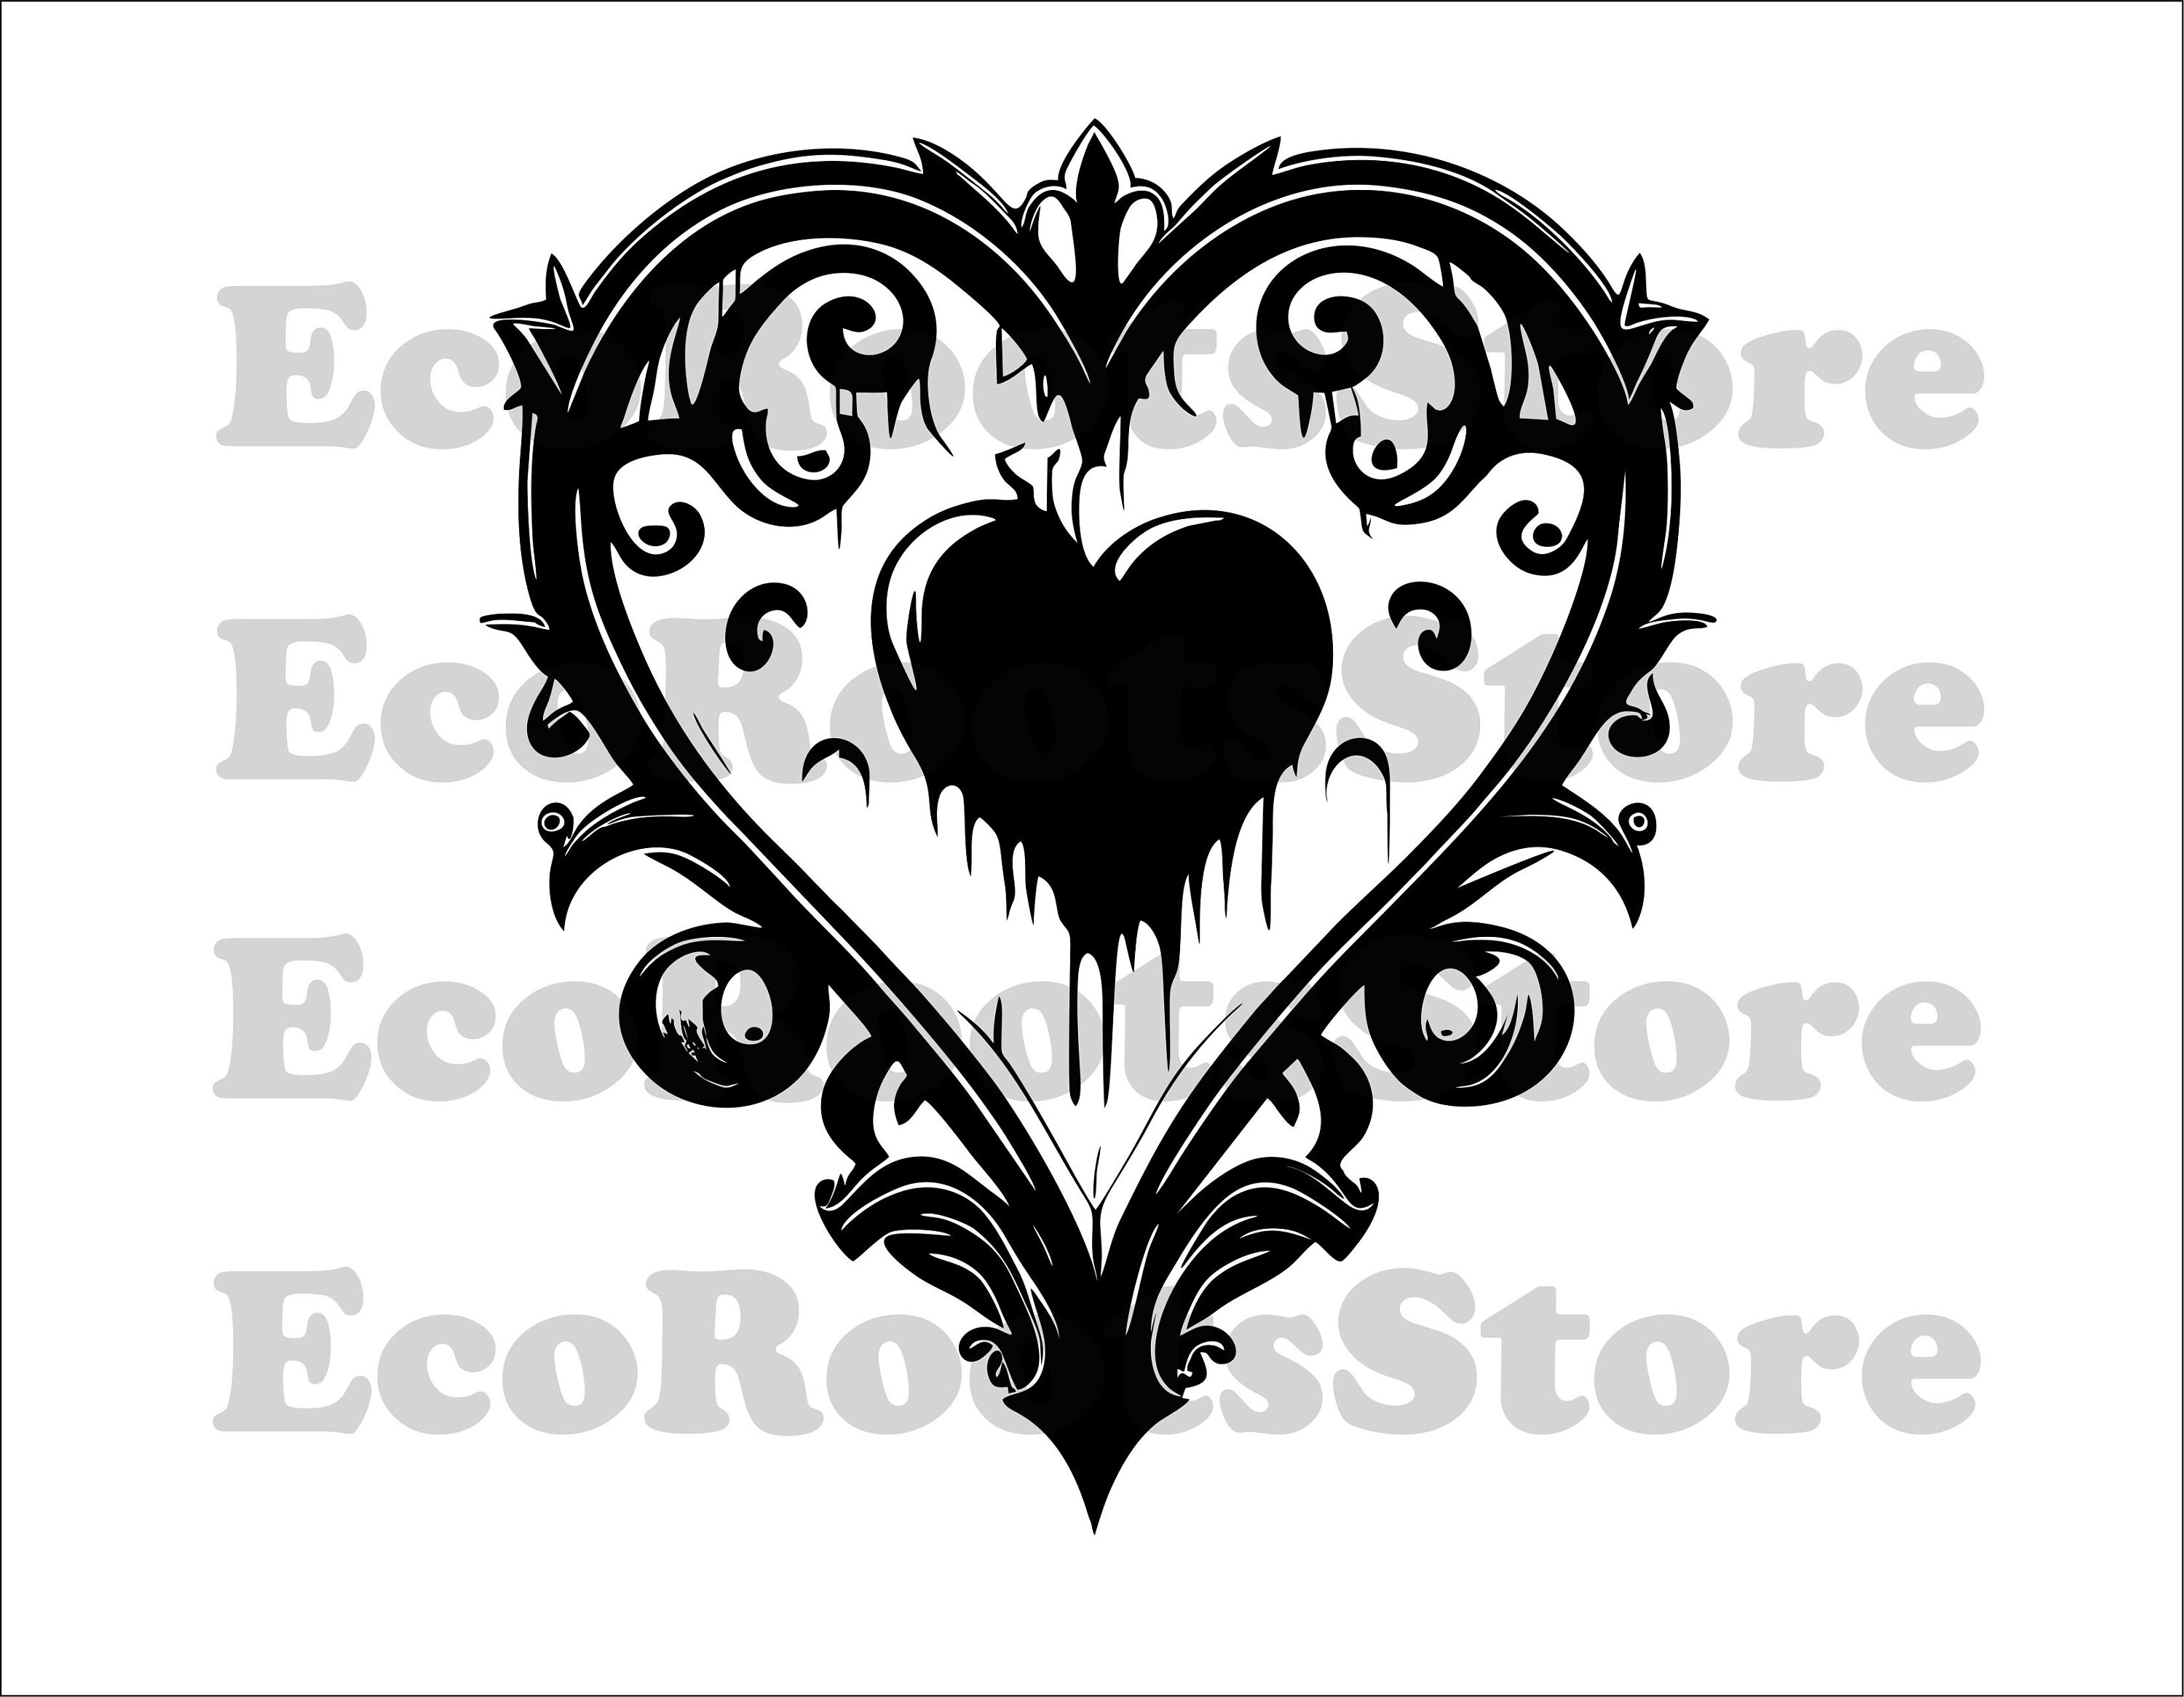 Ecco Logo PNG Vector (EPS) Free Download